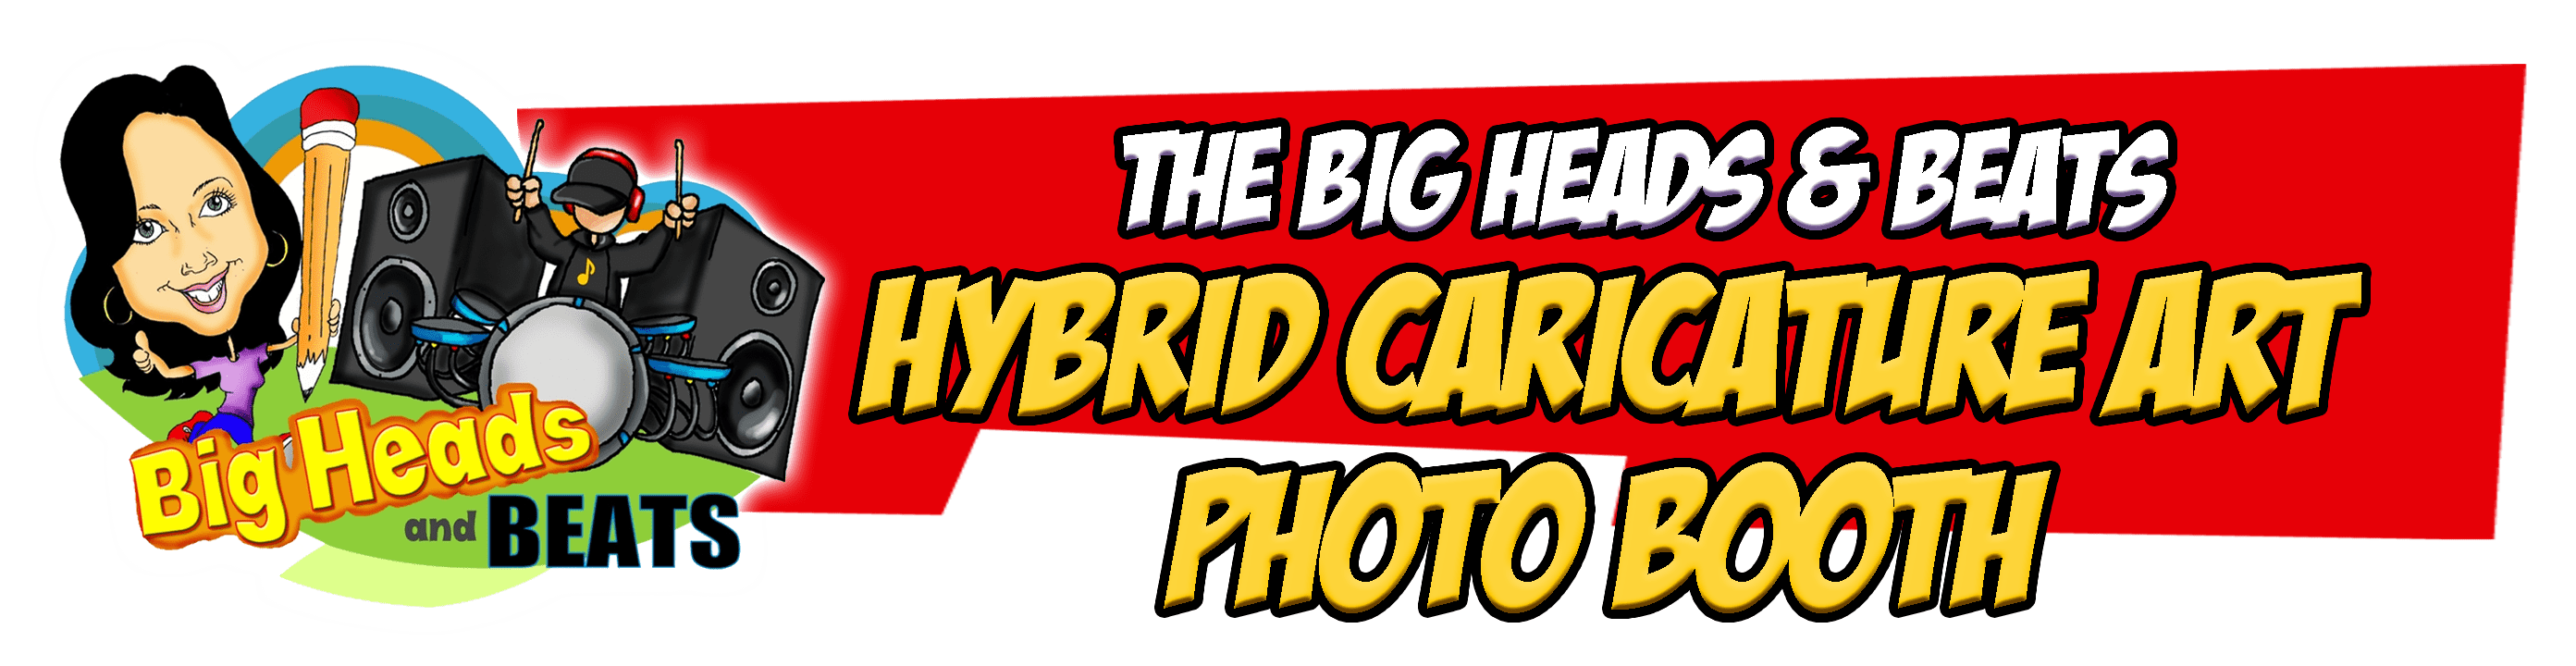 Hybrid Event, Tradeshow Caricatures, Hybrid Event Ideas, Caricatures, Hybrid Caricatures, Live Event Caricatures, Nashville Events, Las Vegas Events